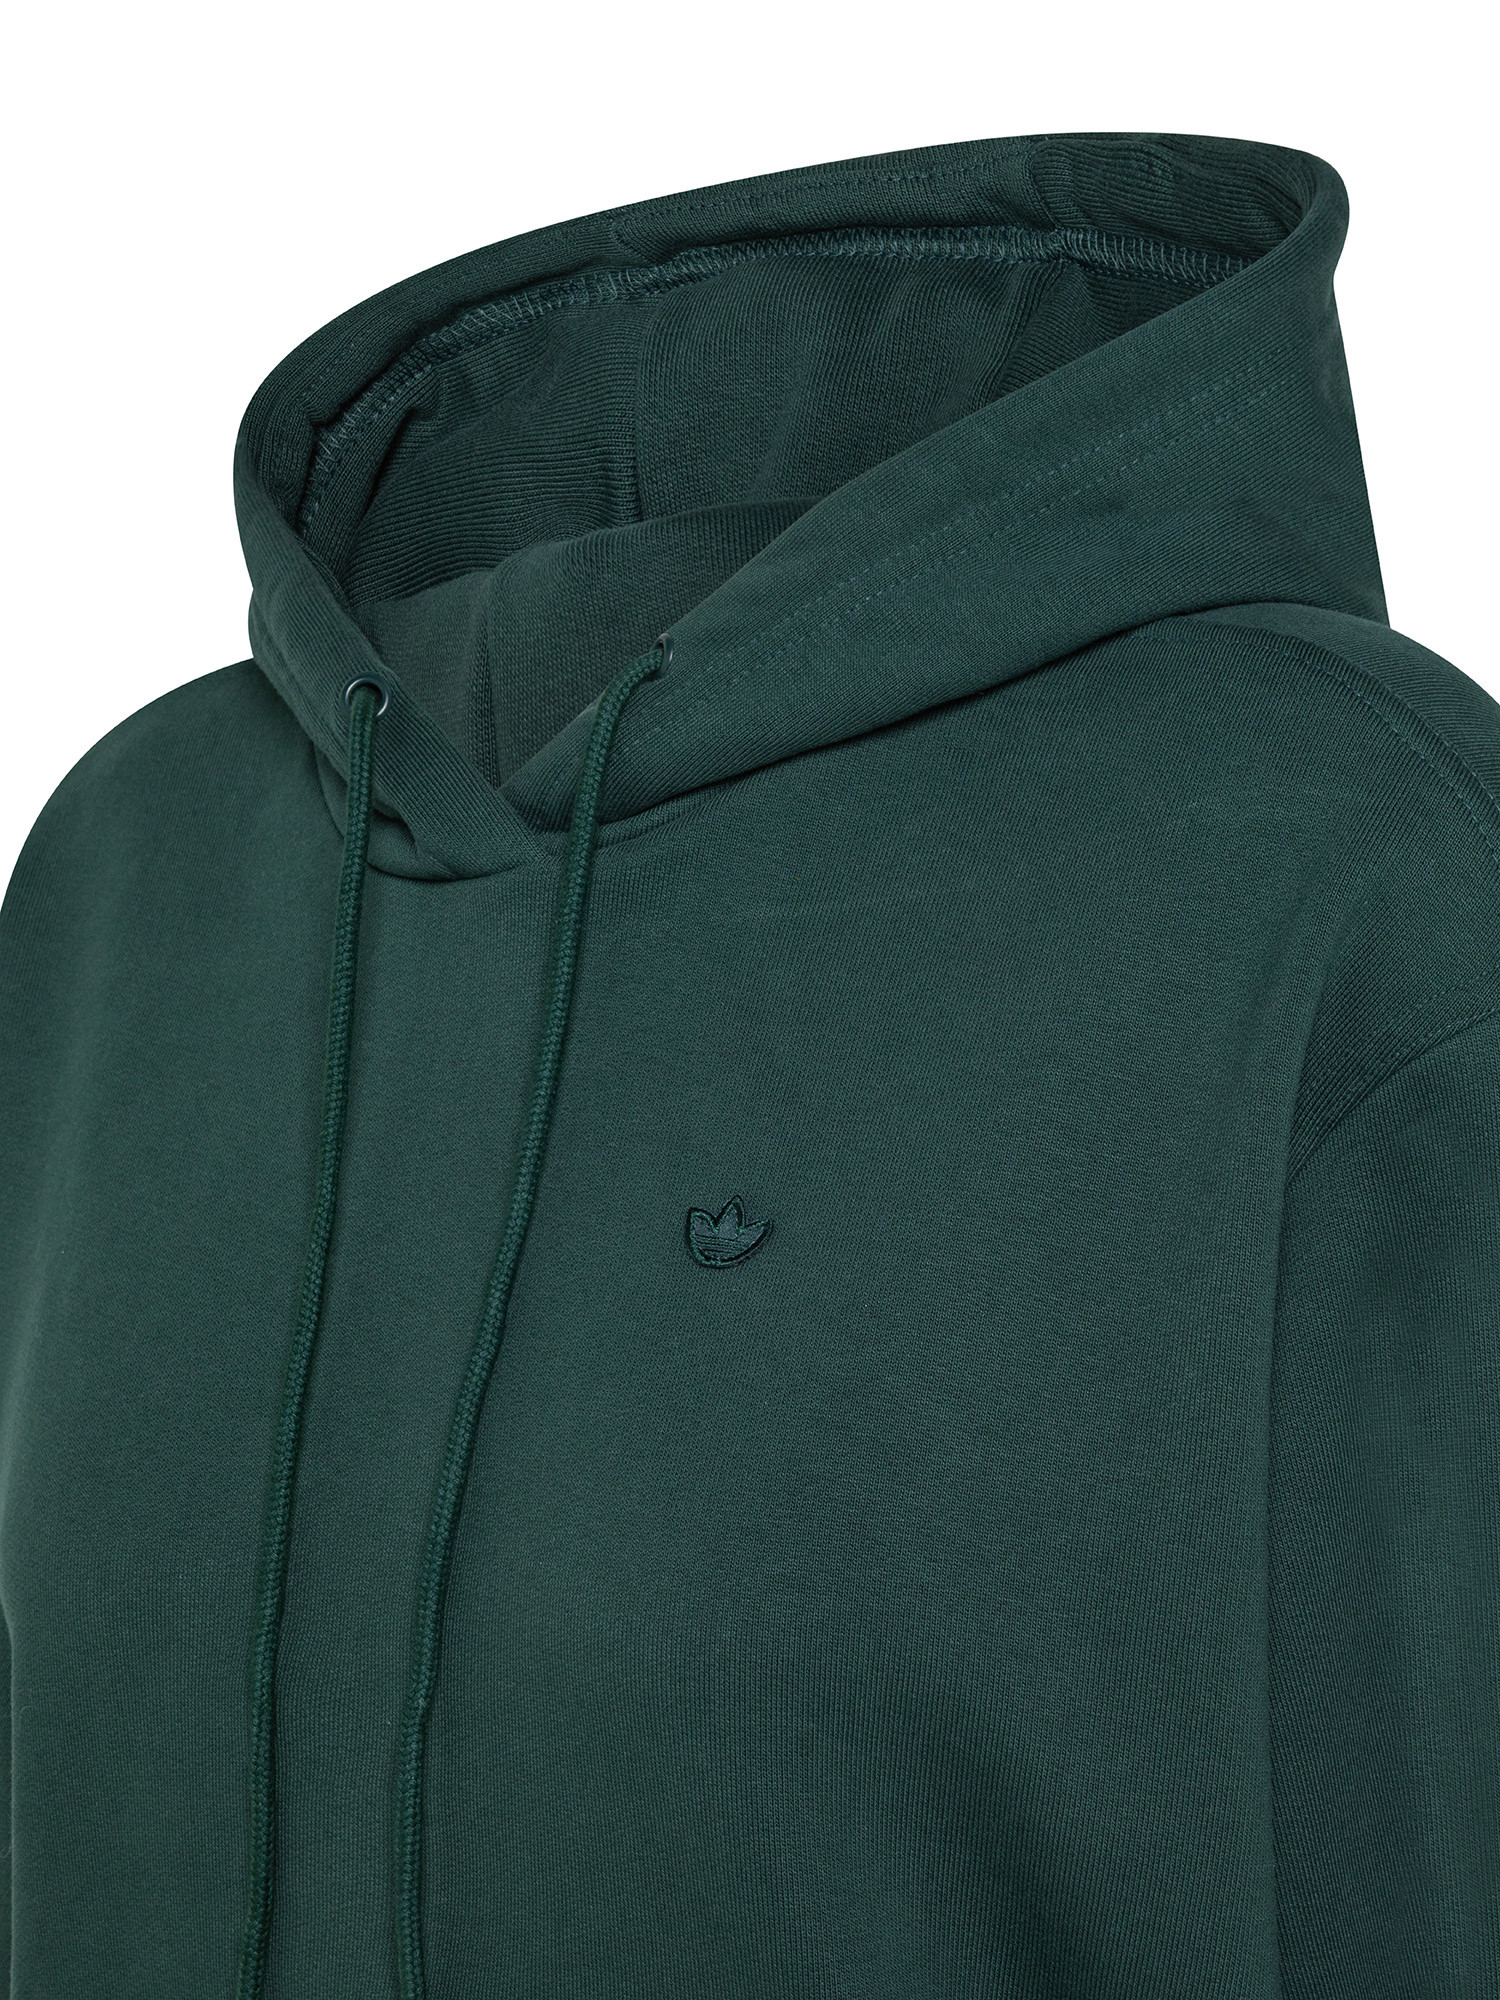 Adidas - Oversized adicolor sweatshirt, Dark Green, large image number 2